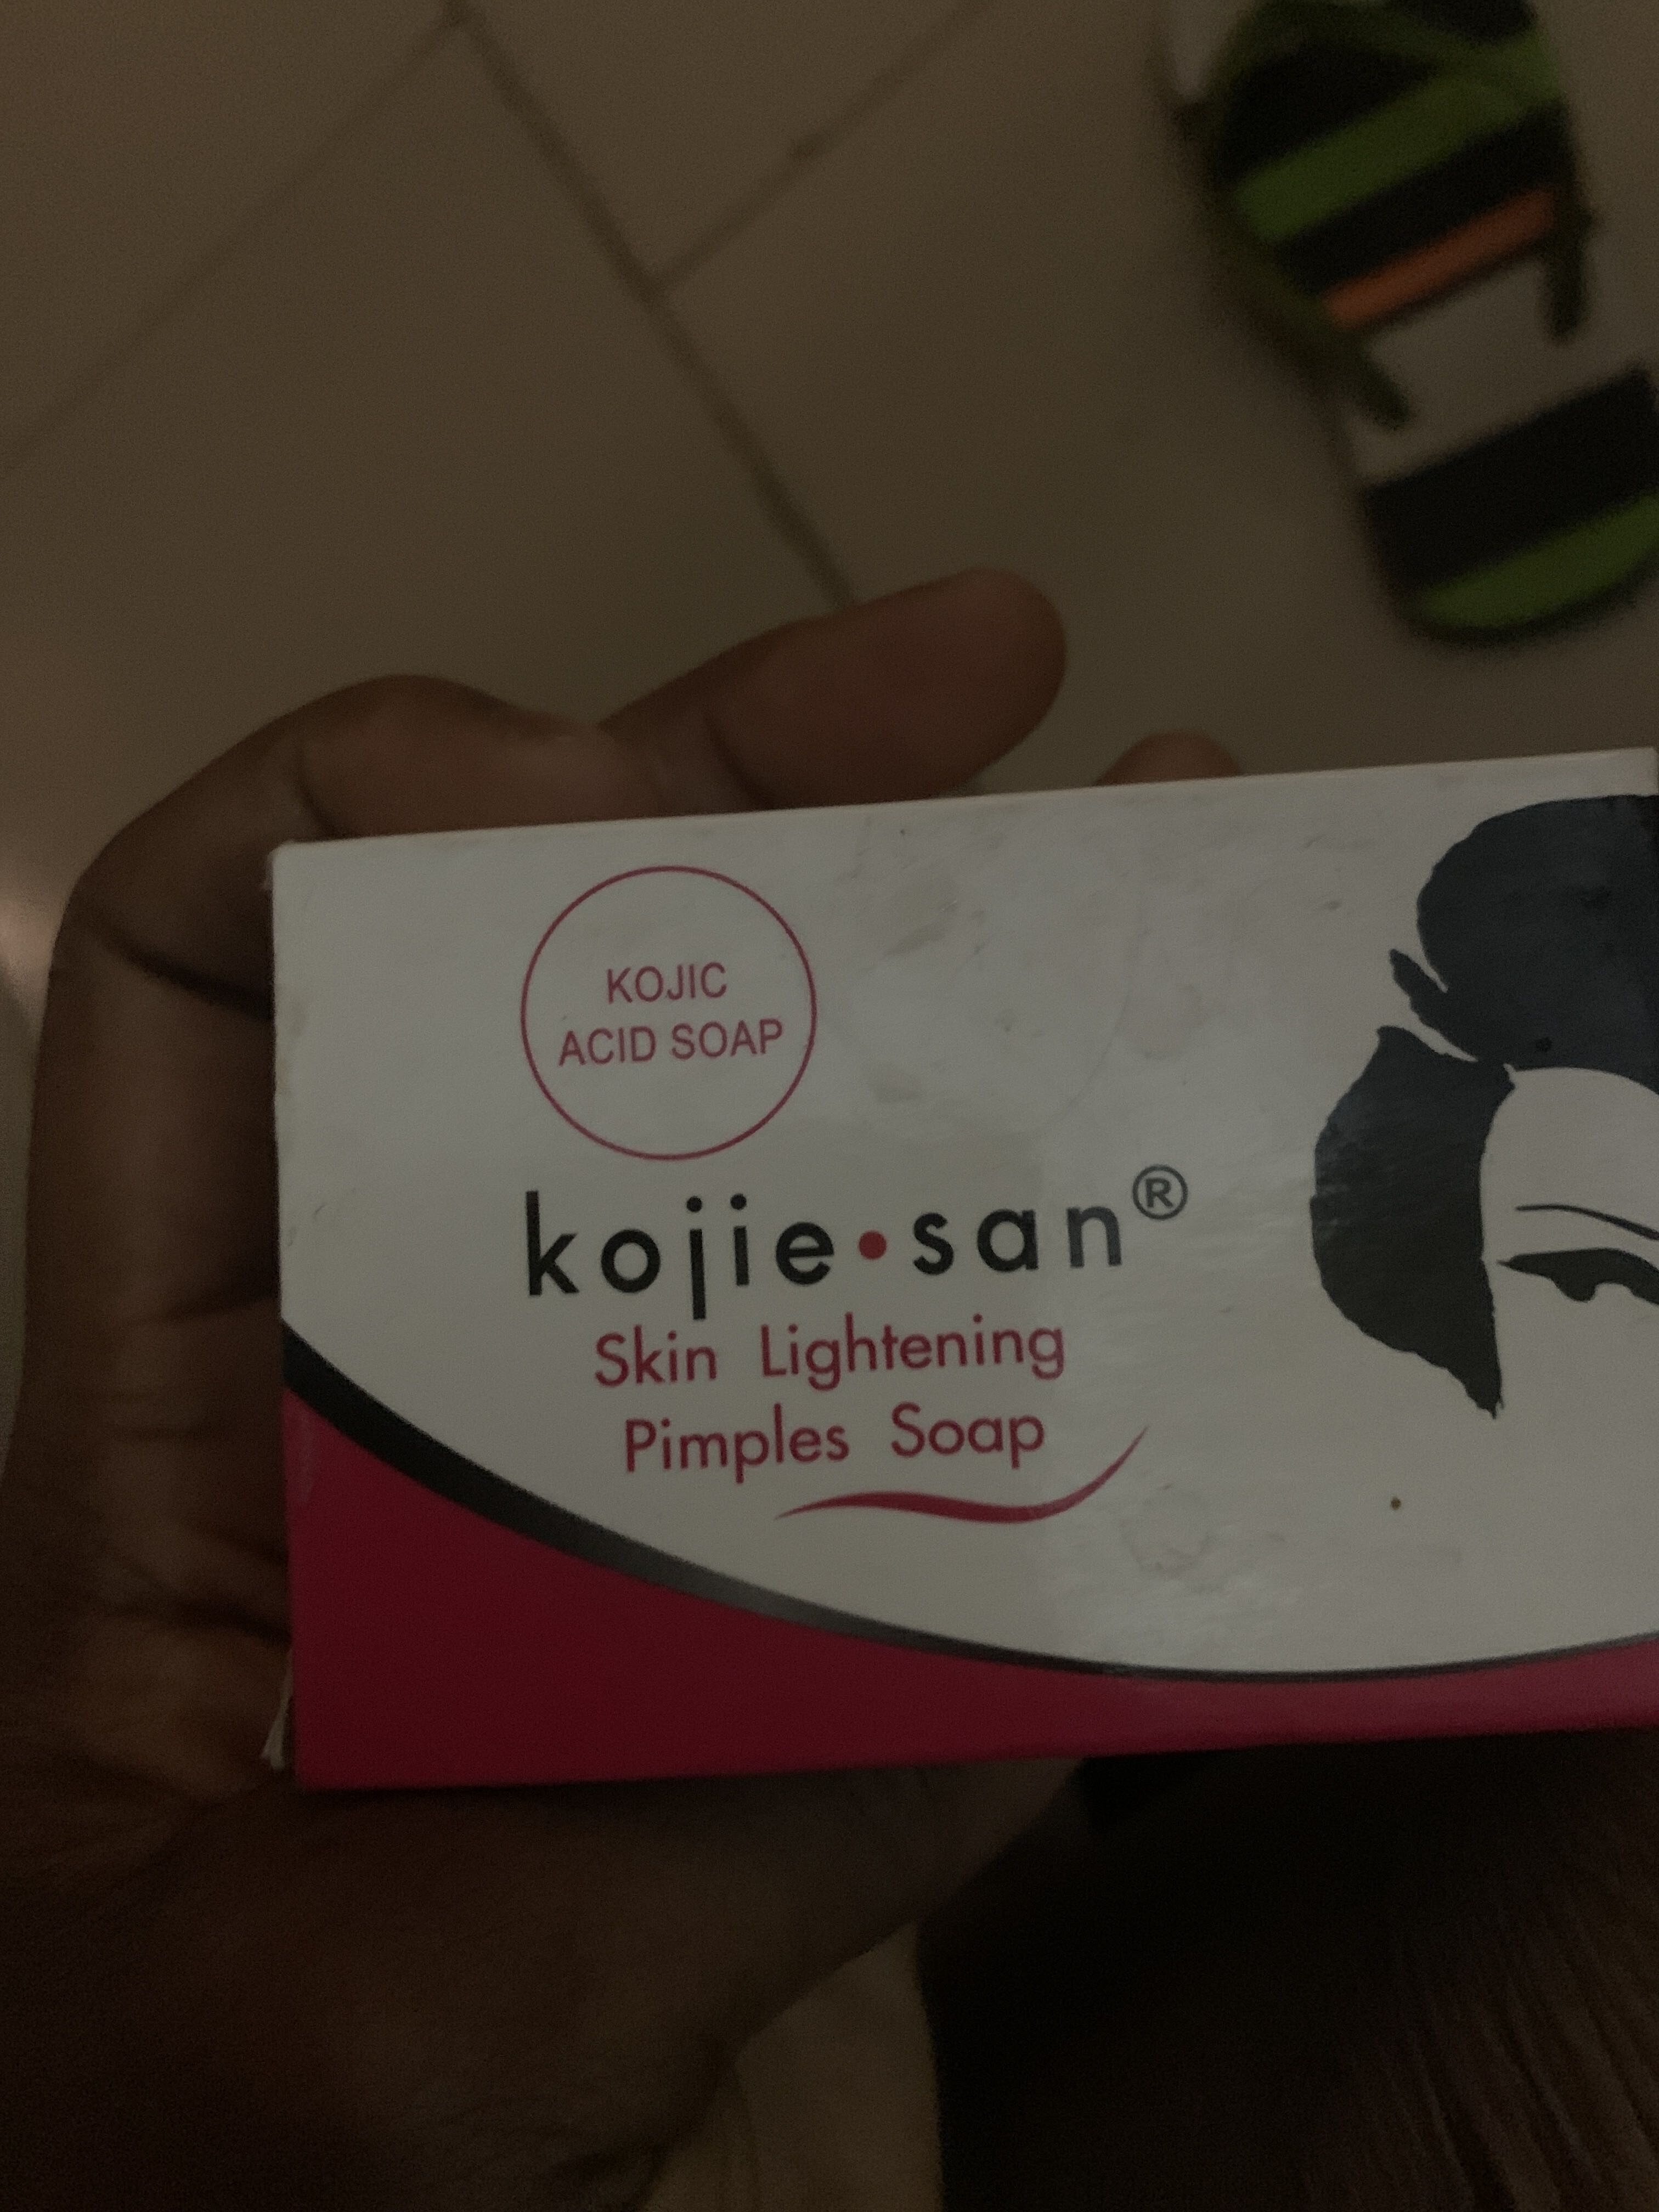 Kojie San skin lightening pimples soap - Produto - en